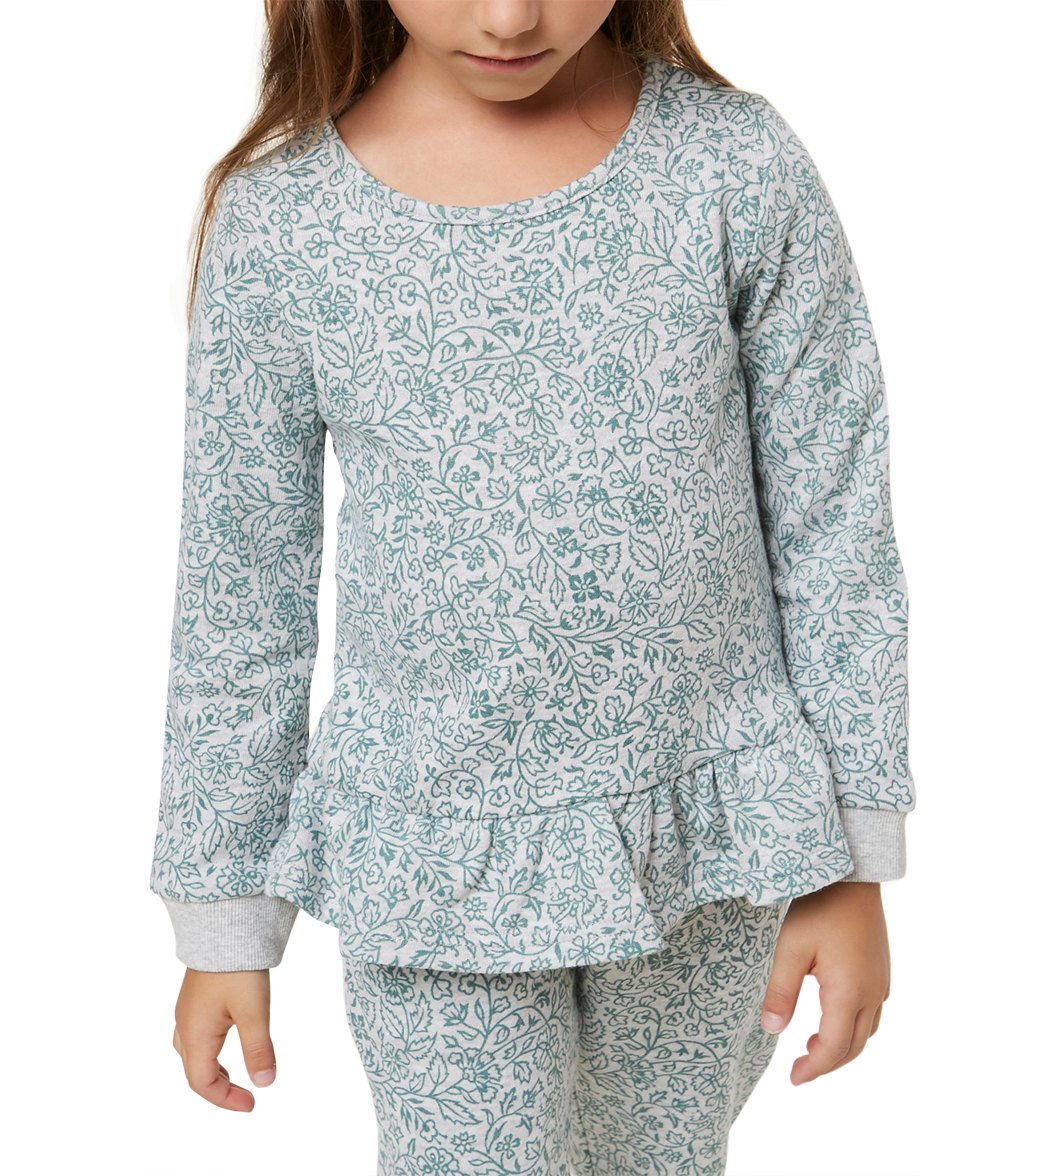 O'neill Girls' Loveland Pullover Fleece Top Toddler - Heather Grey 3T Cotton/Polyester - Swimoutlet.com